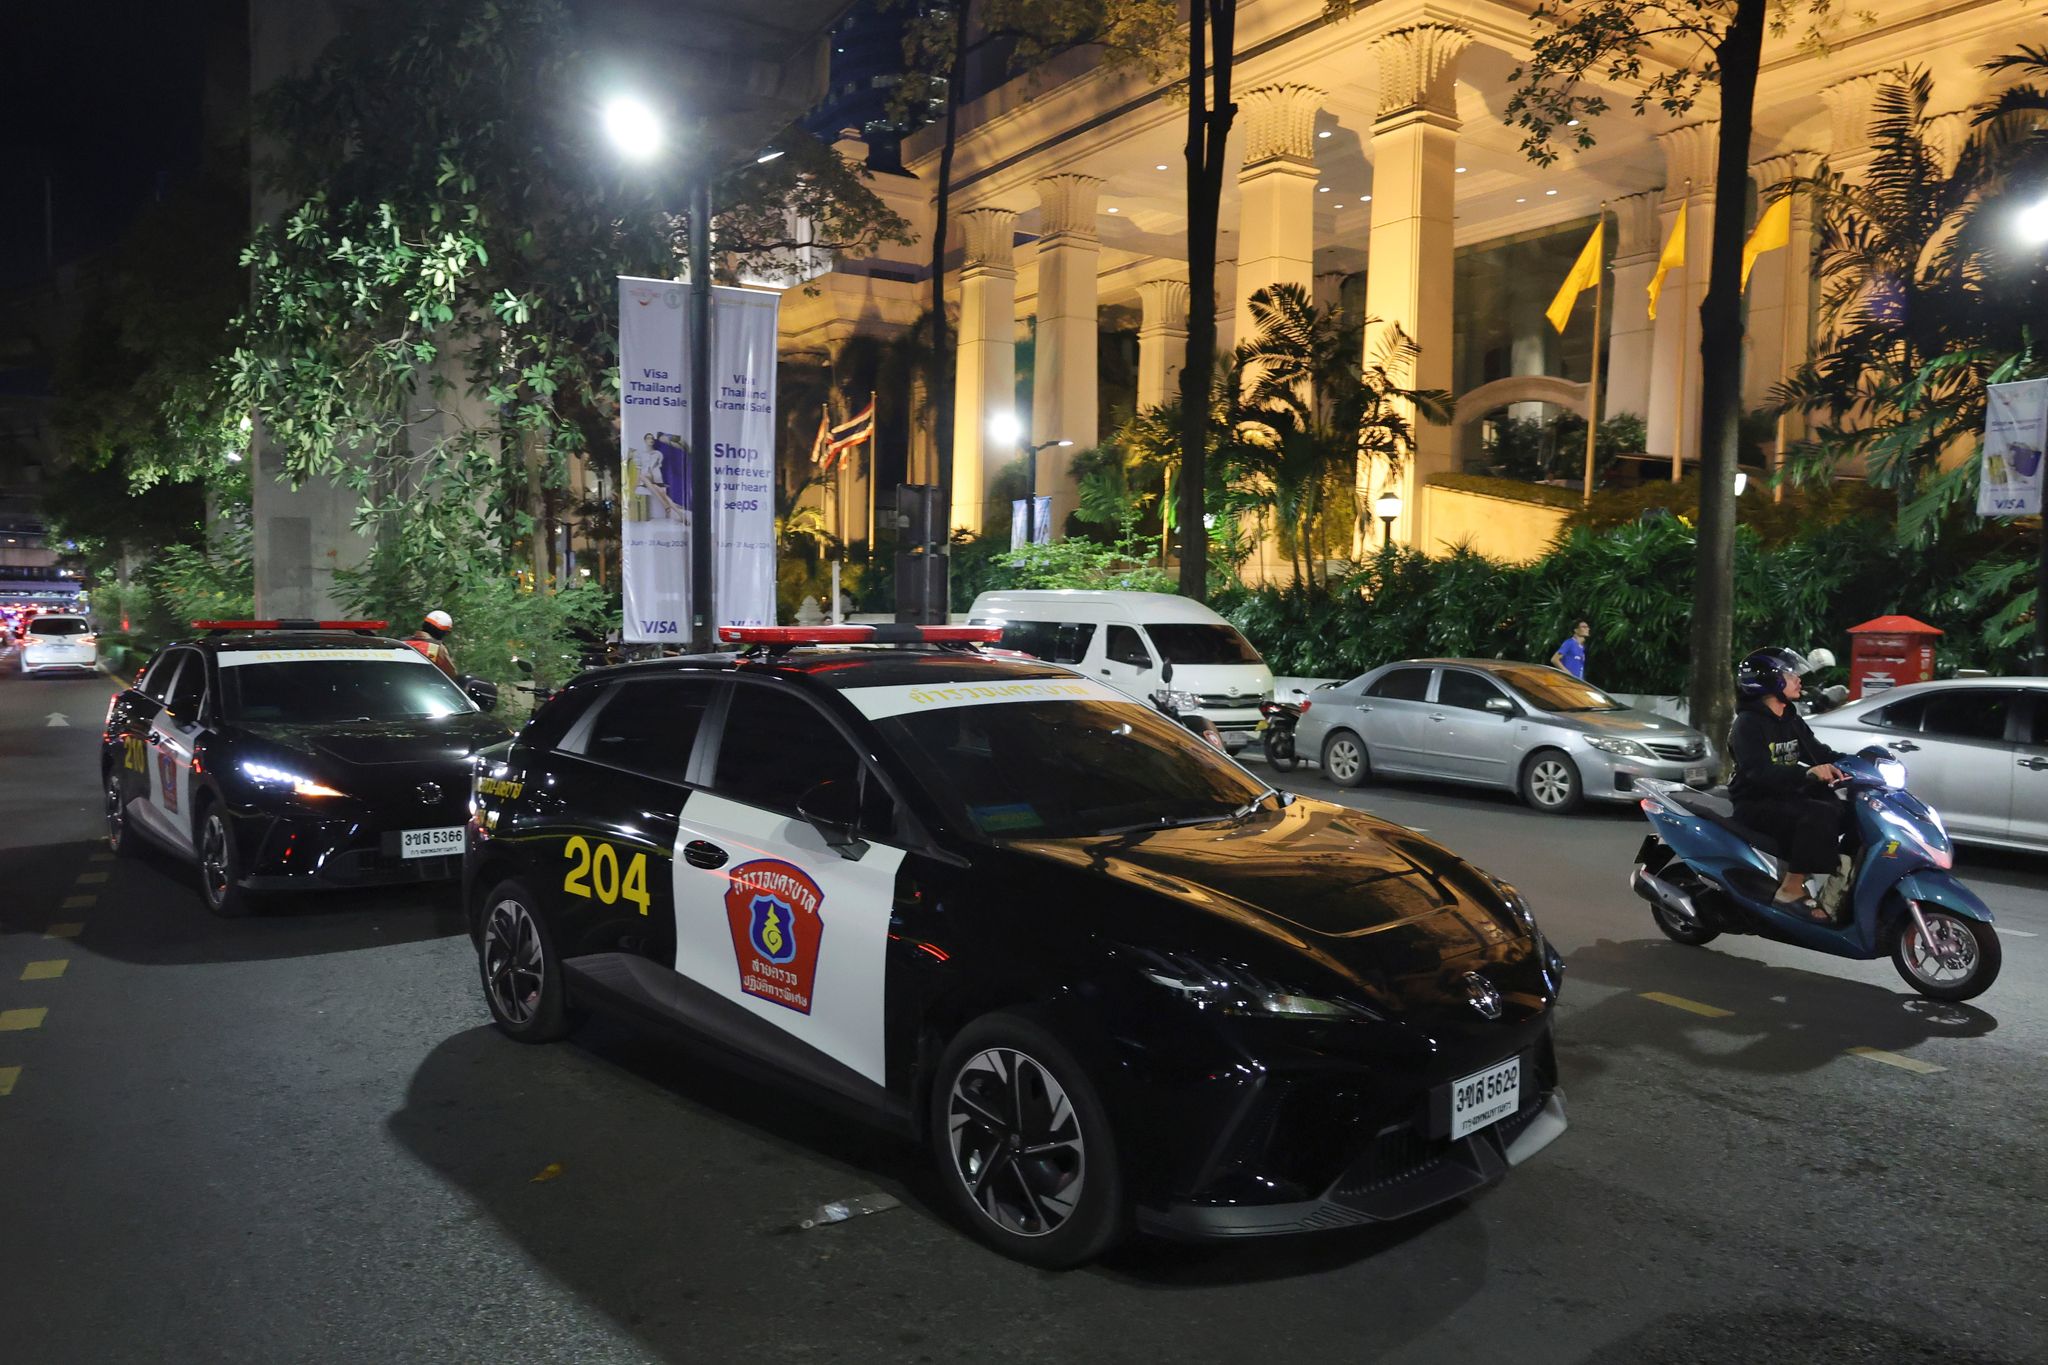 Sechs Vietnamesen tot in Luxushotel in Bangkok aufgefunden